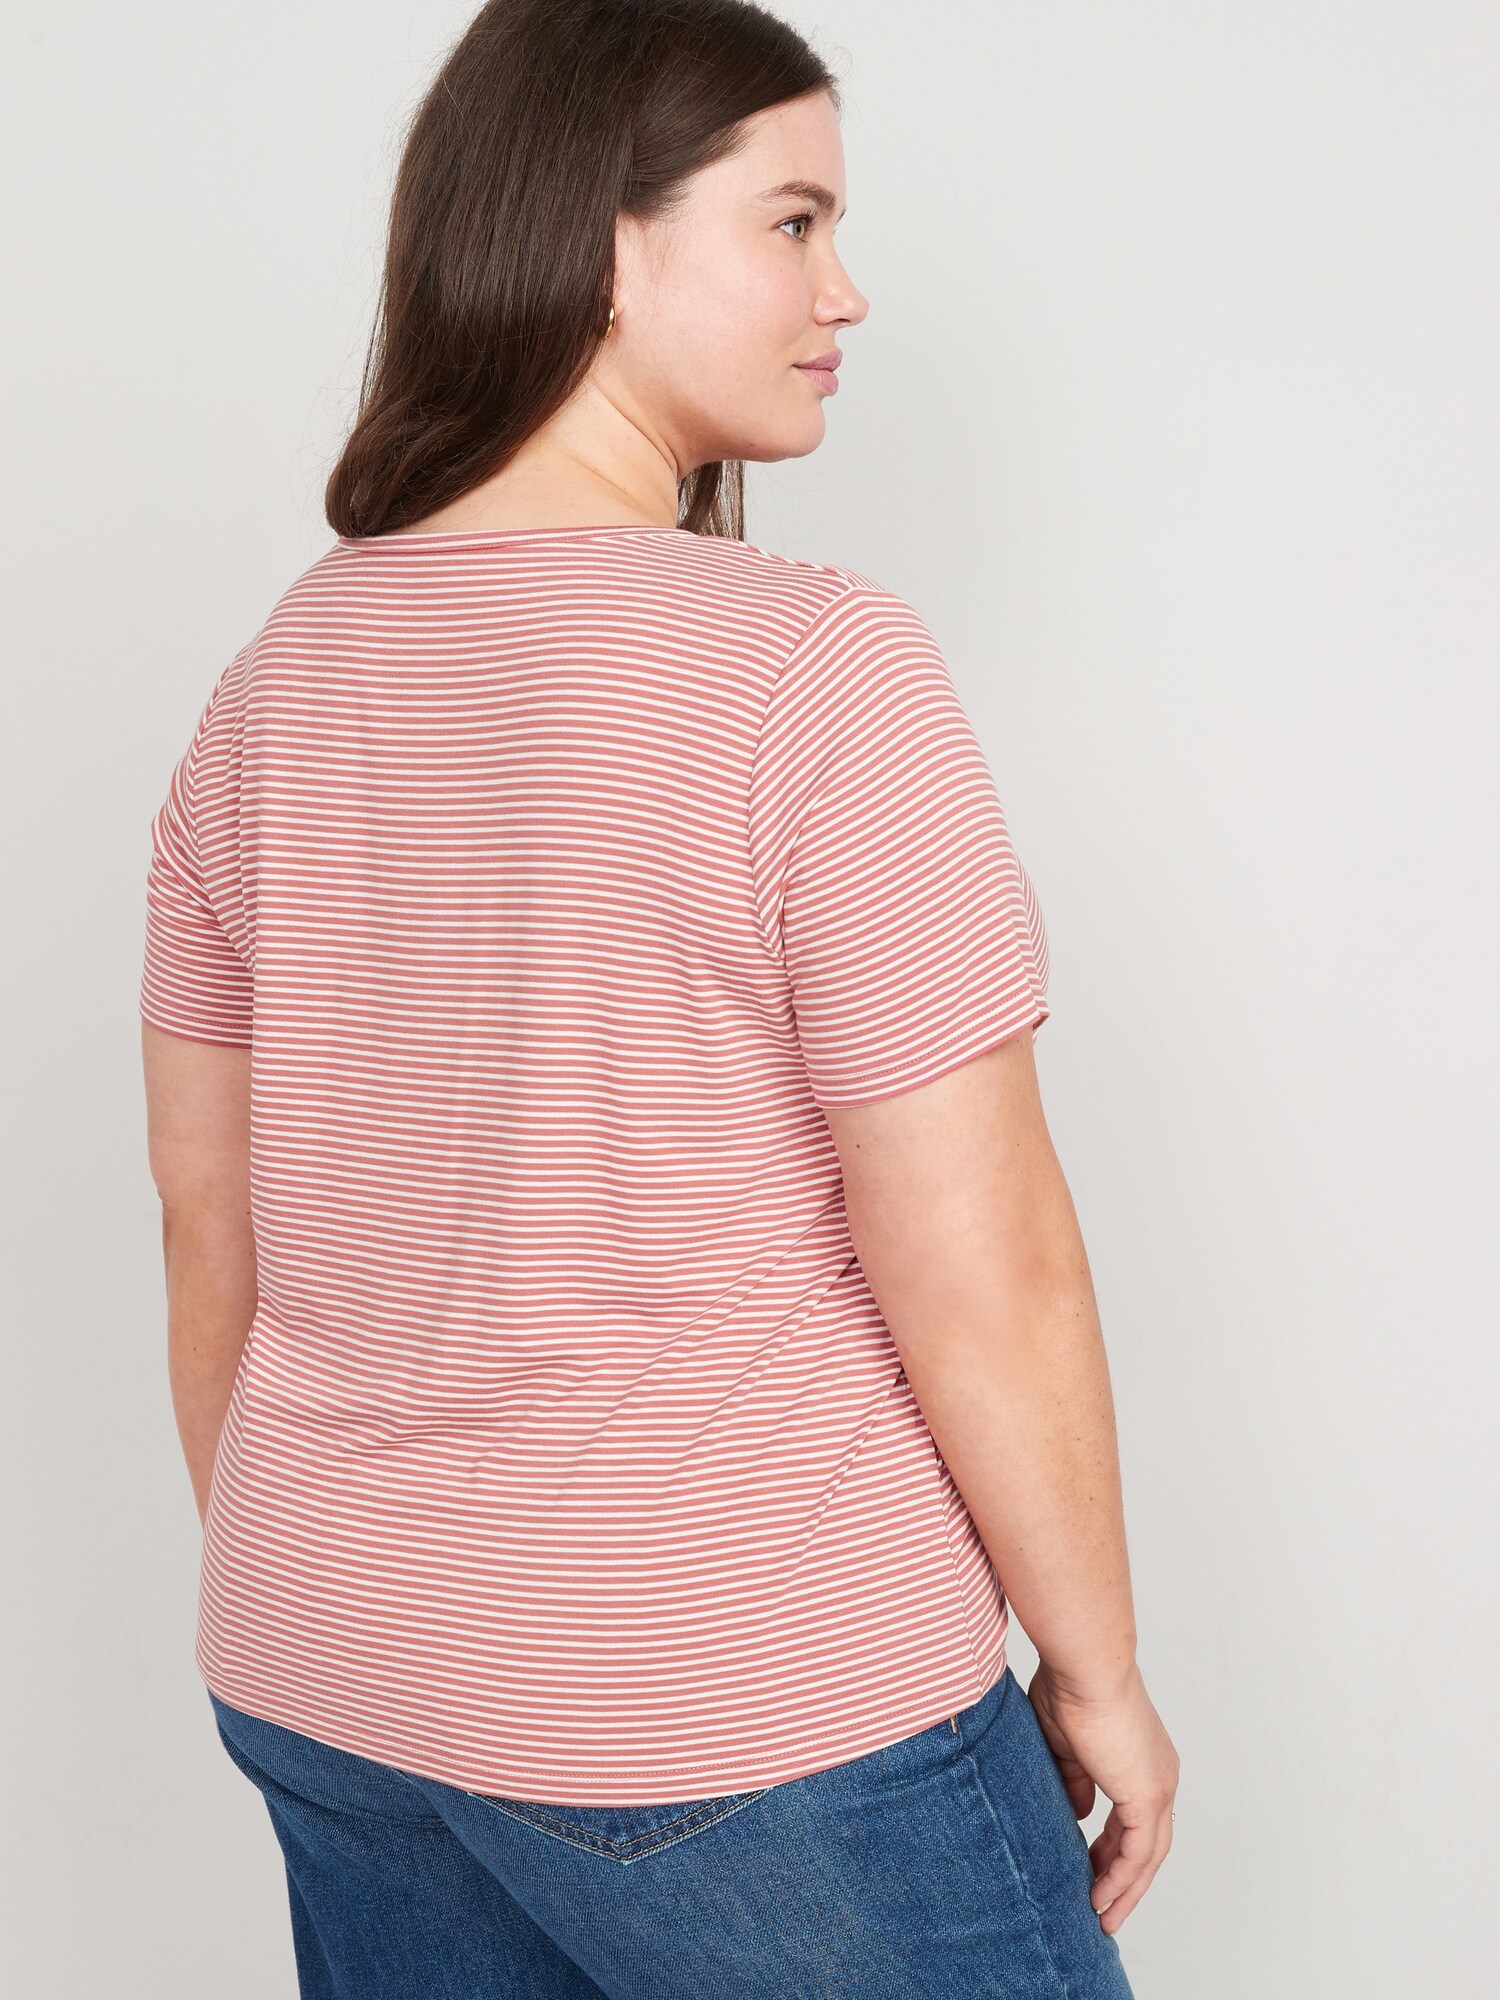 Buy Women's Shirts Lipsy Stripe Tops Online